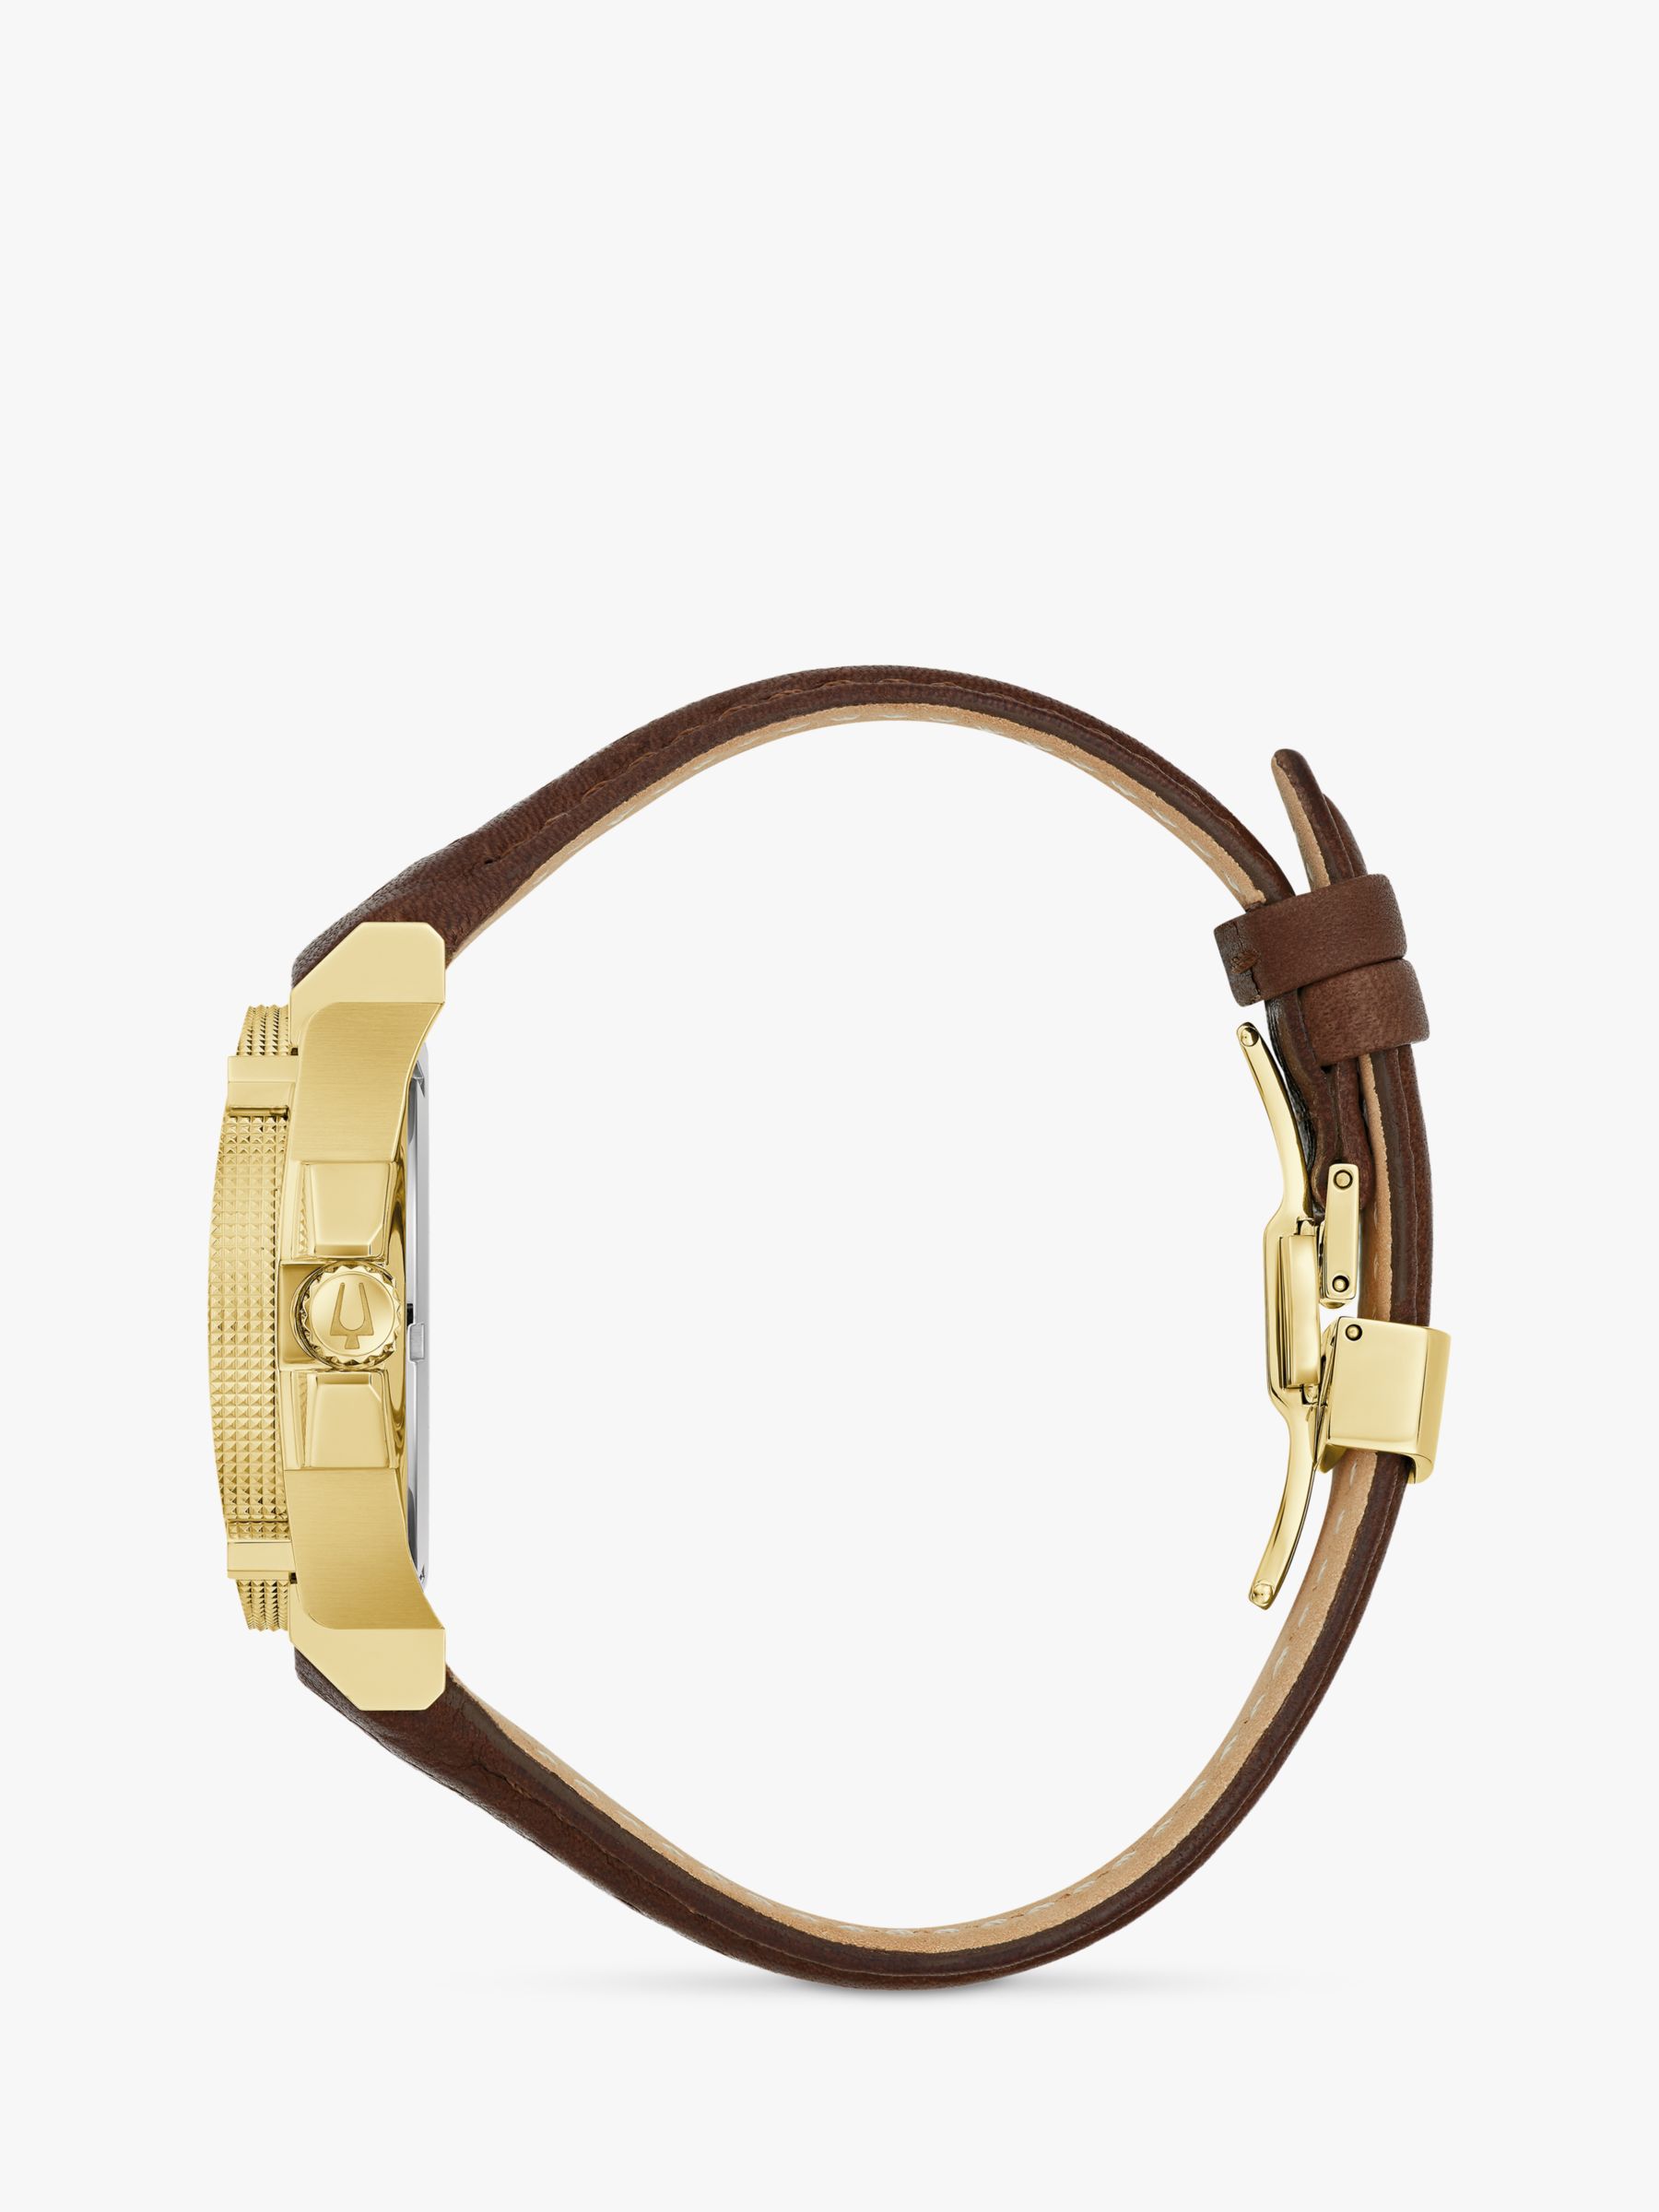 Bulova 97B216 Men's Icon Precisionist Leather Strap Watch, Brown